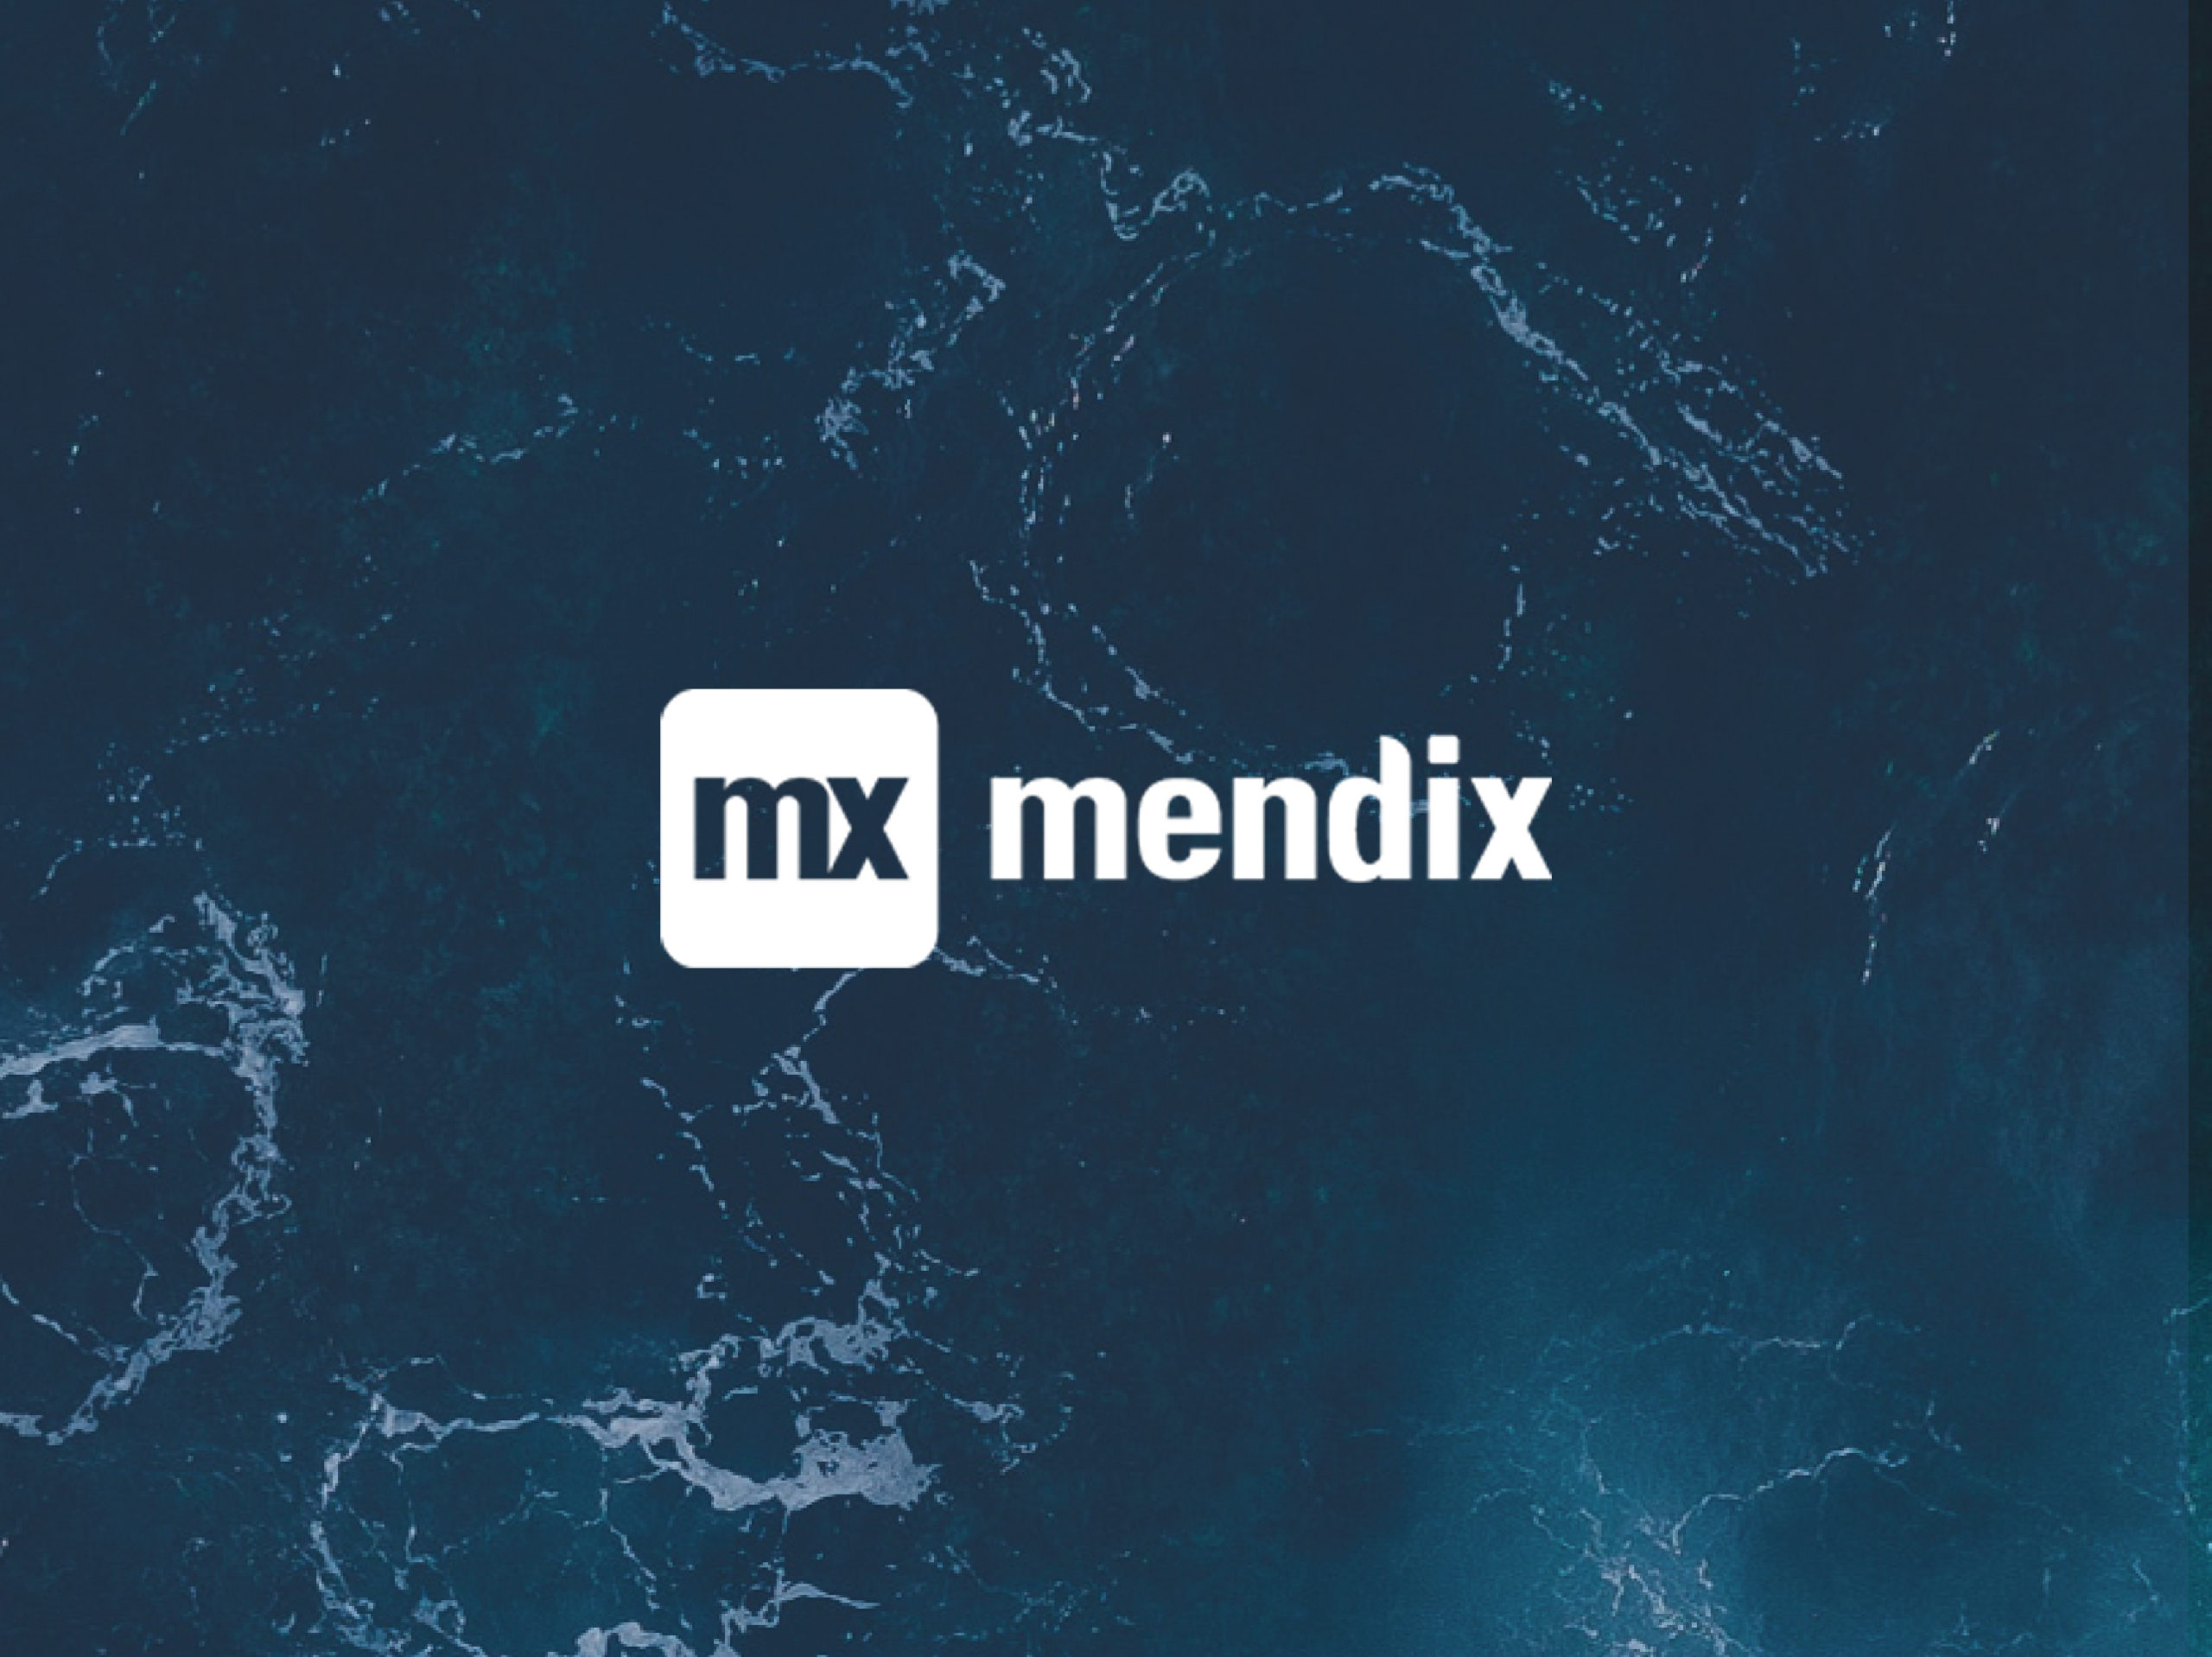 Partnership with Mendix